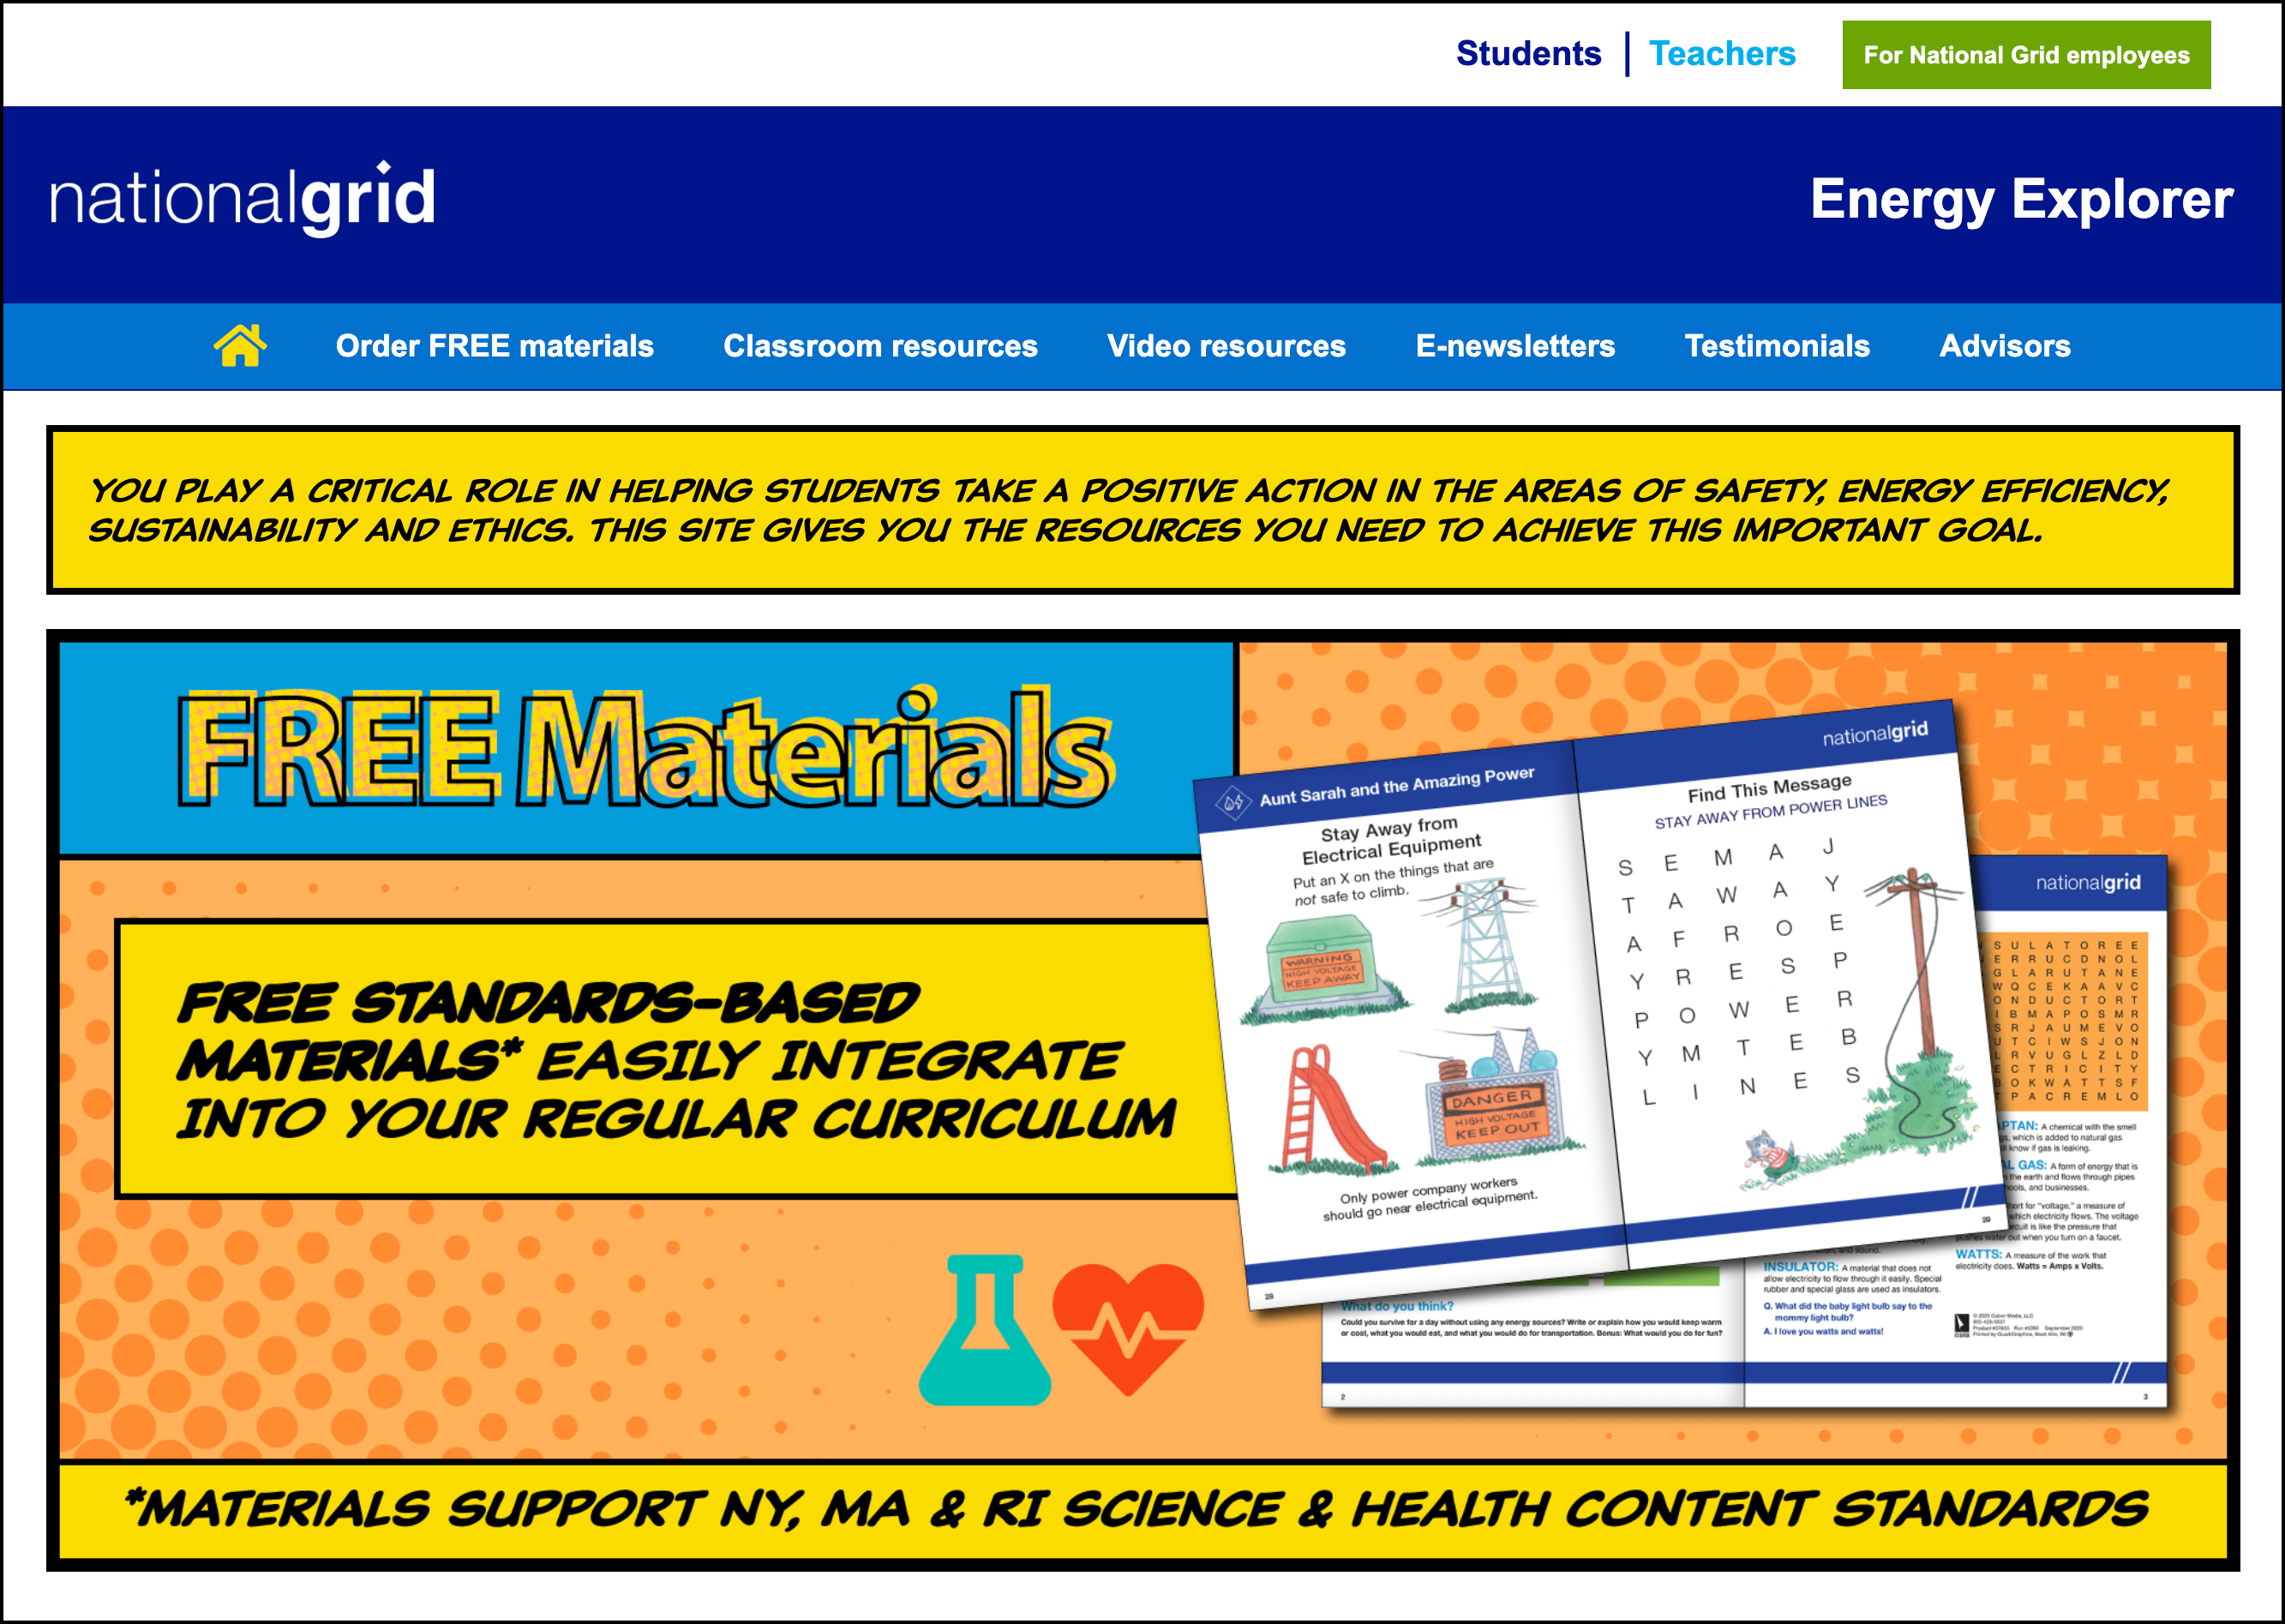 Energy Explorer website teachers landing page